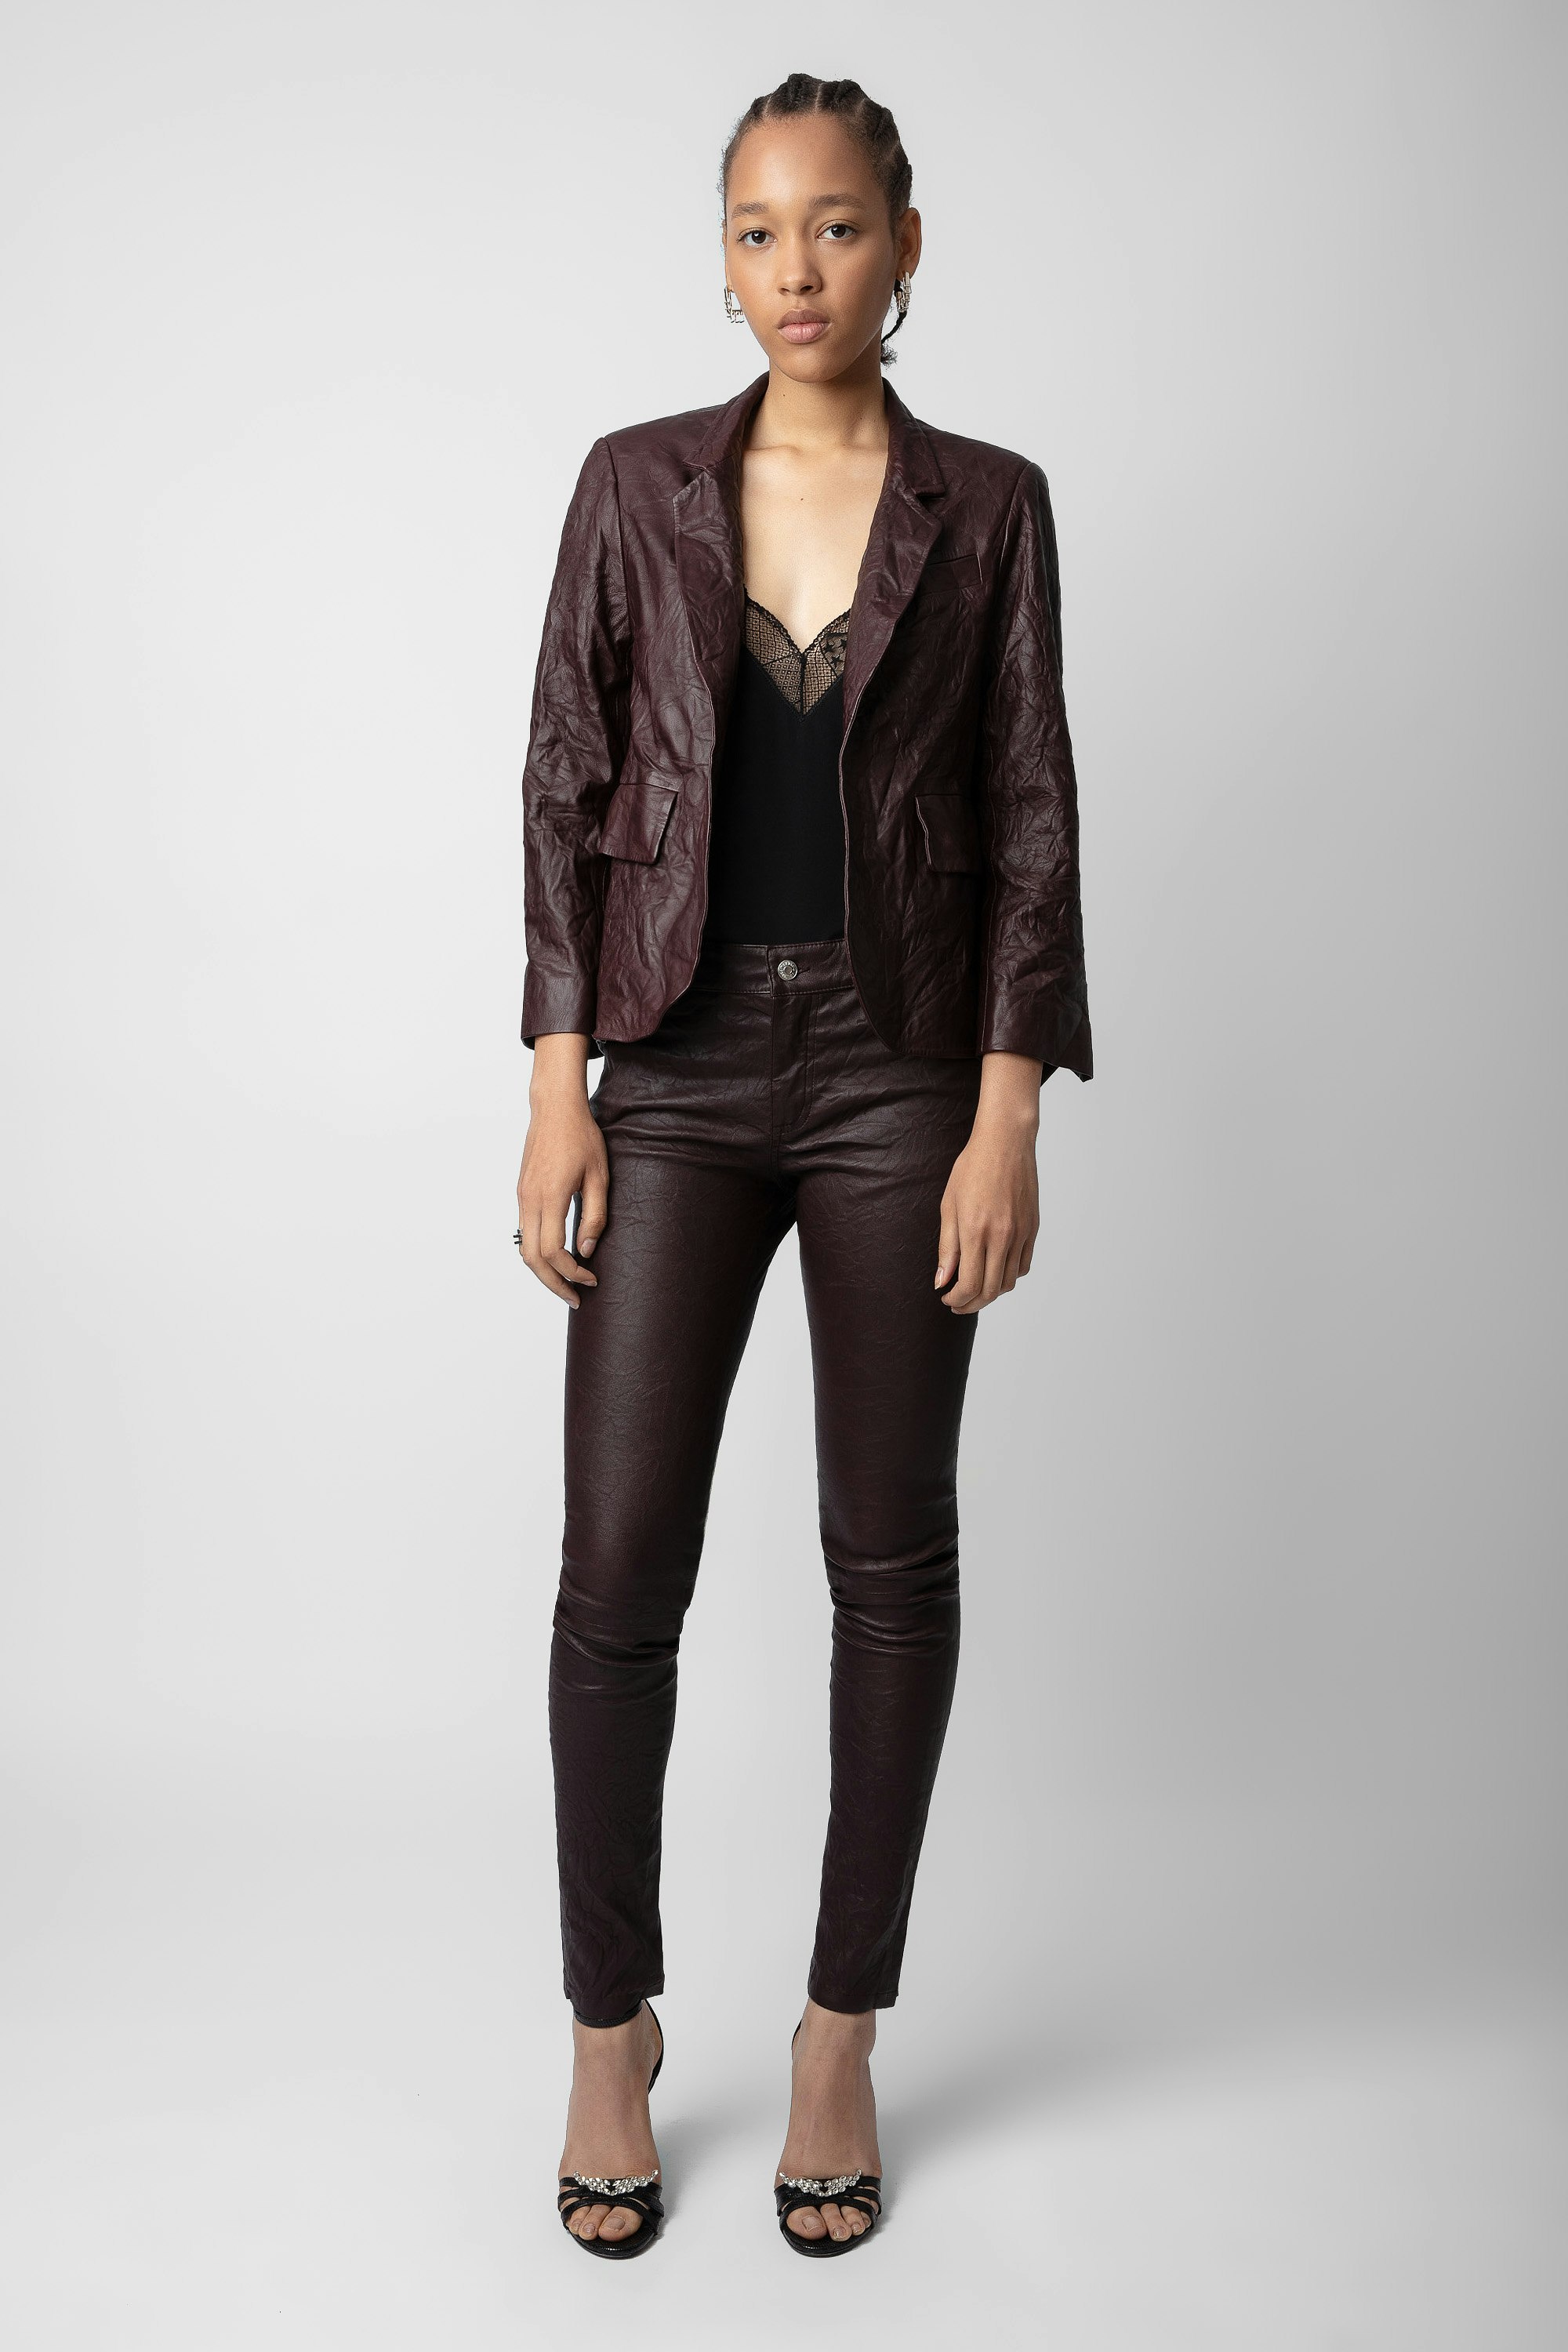 Verys Crinkled Leather Blazer - Women’s brown crinkled leather blazer with 3/4-length sleeves.